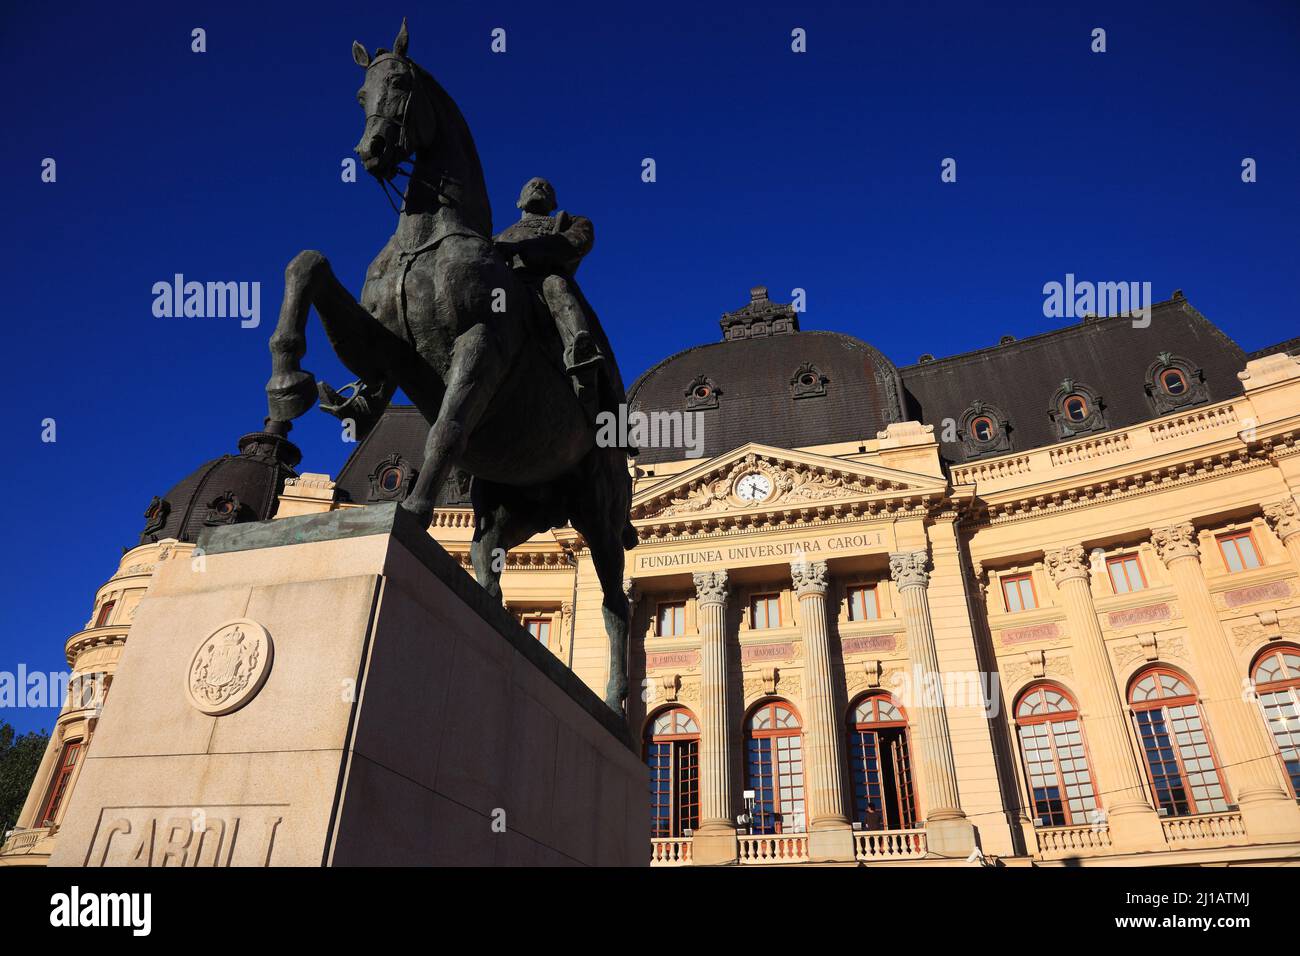 Universitätsbibliothek mit Reiterstatue Carol I., Bukarest, Rumänien  /  University library with equestrian statue Carol I, Bucharest, Romania (Aufnah Stock Photo